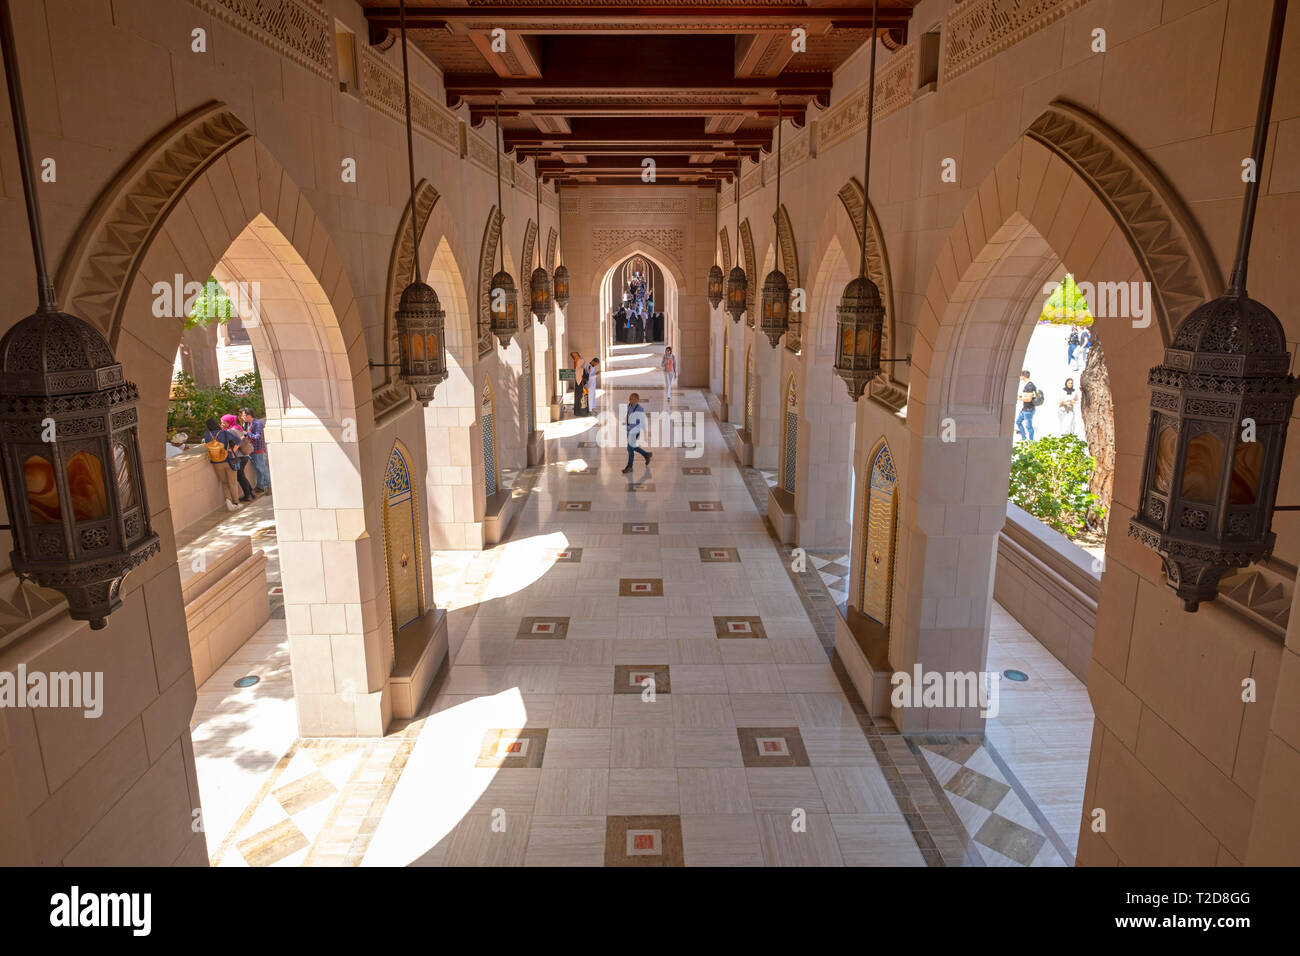 Sultan Qaboos Grand Mosque in Muscat, Oman Stock Photo